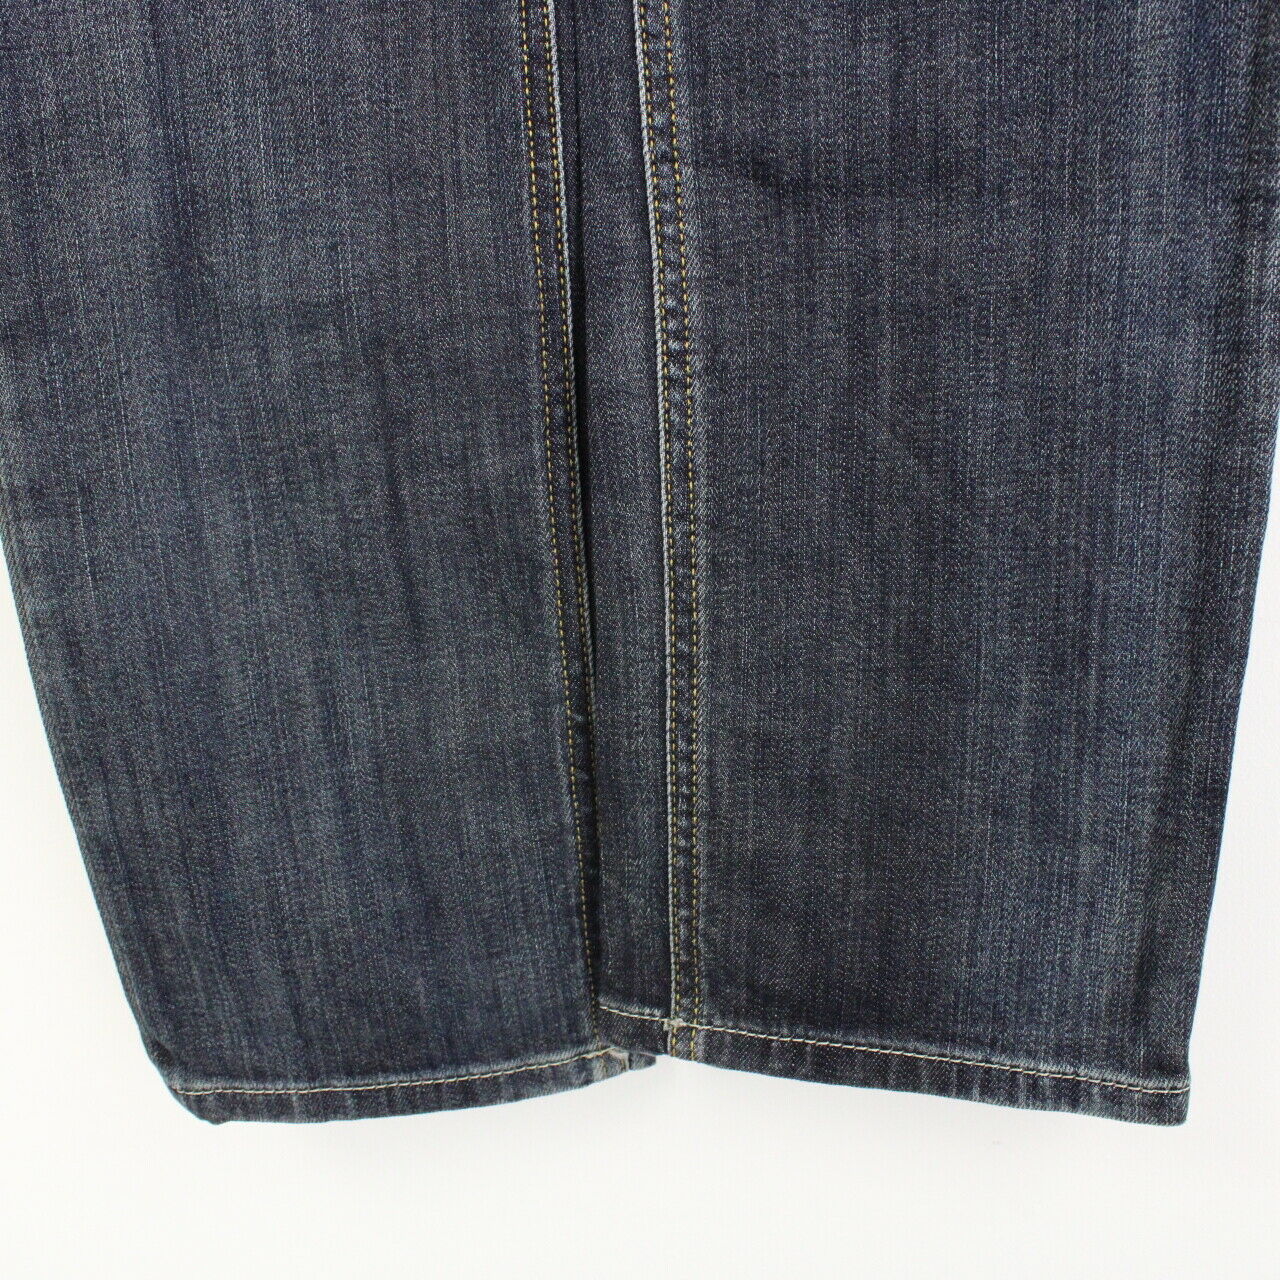 Mens DIESEL Shioner Jeans Dark Blue | W34 L32